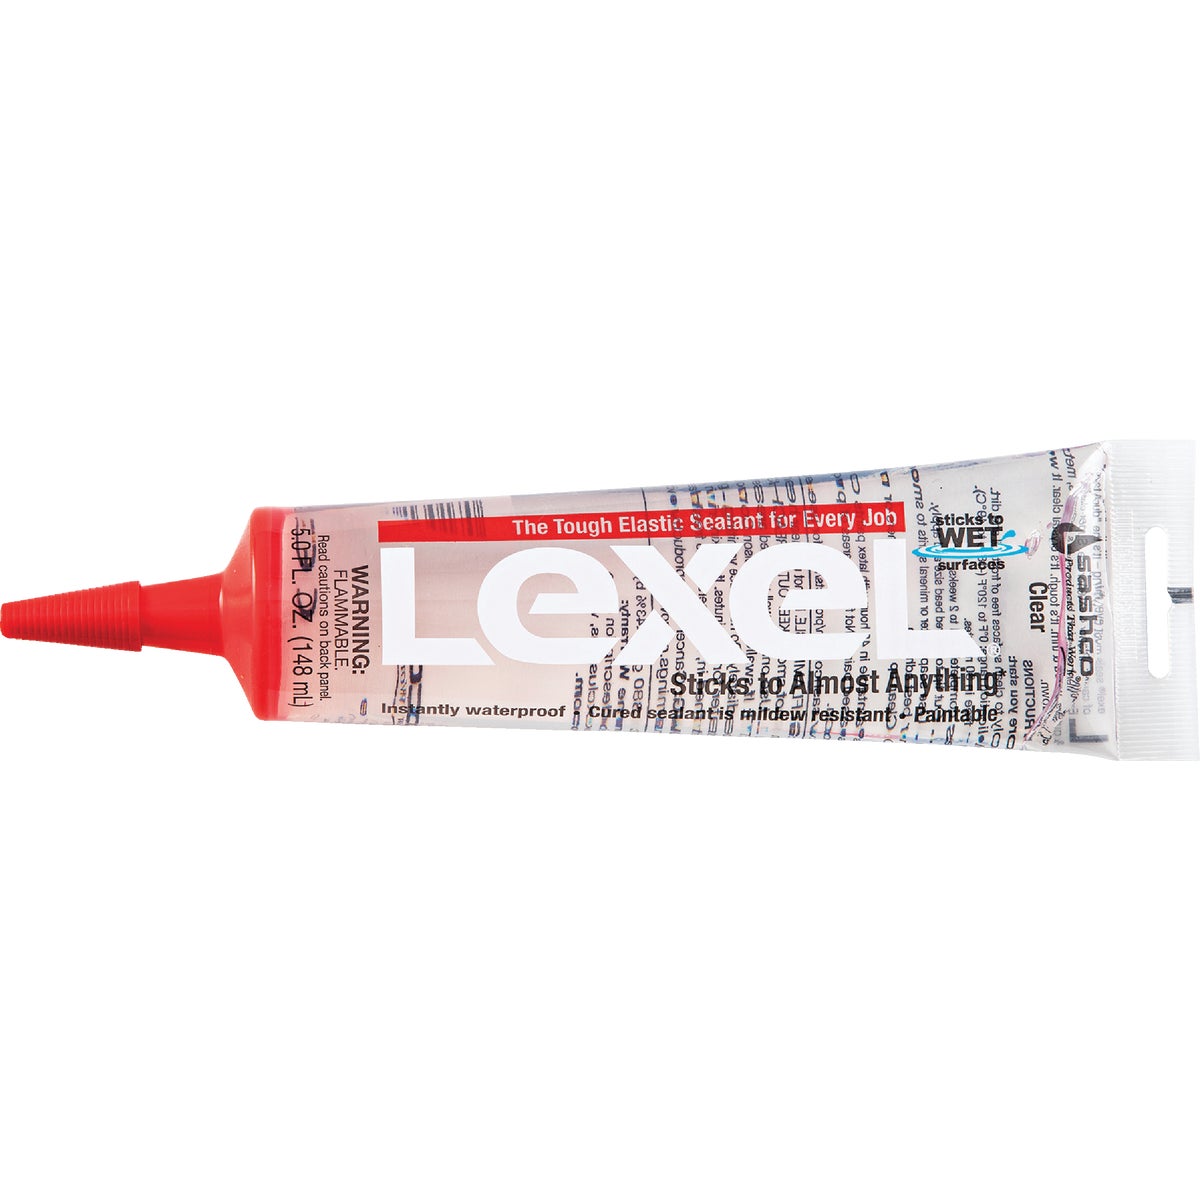 Item 787894, Lexel is the Tough Elastic Sealant for Every Job. Super-elastic.